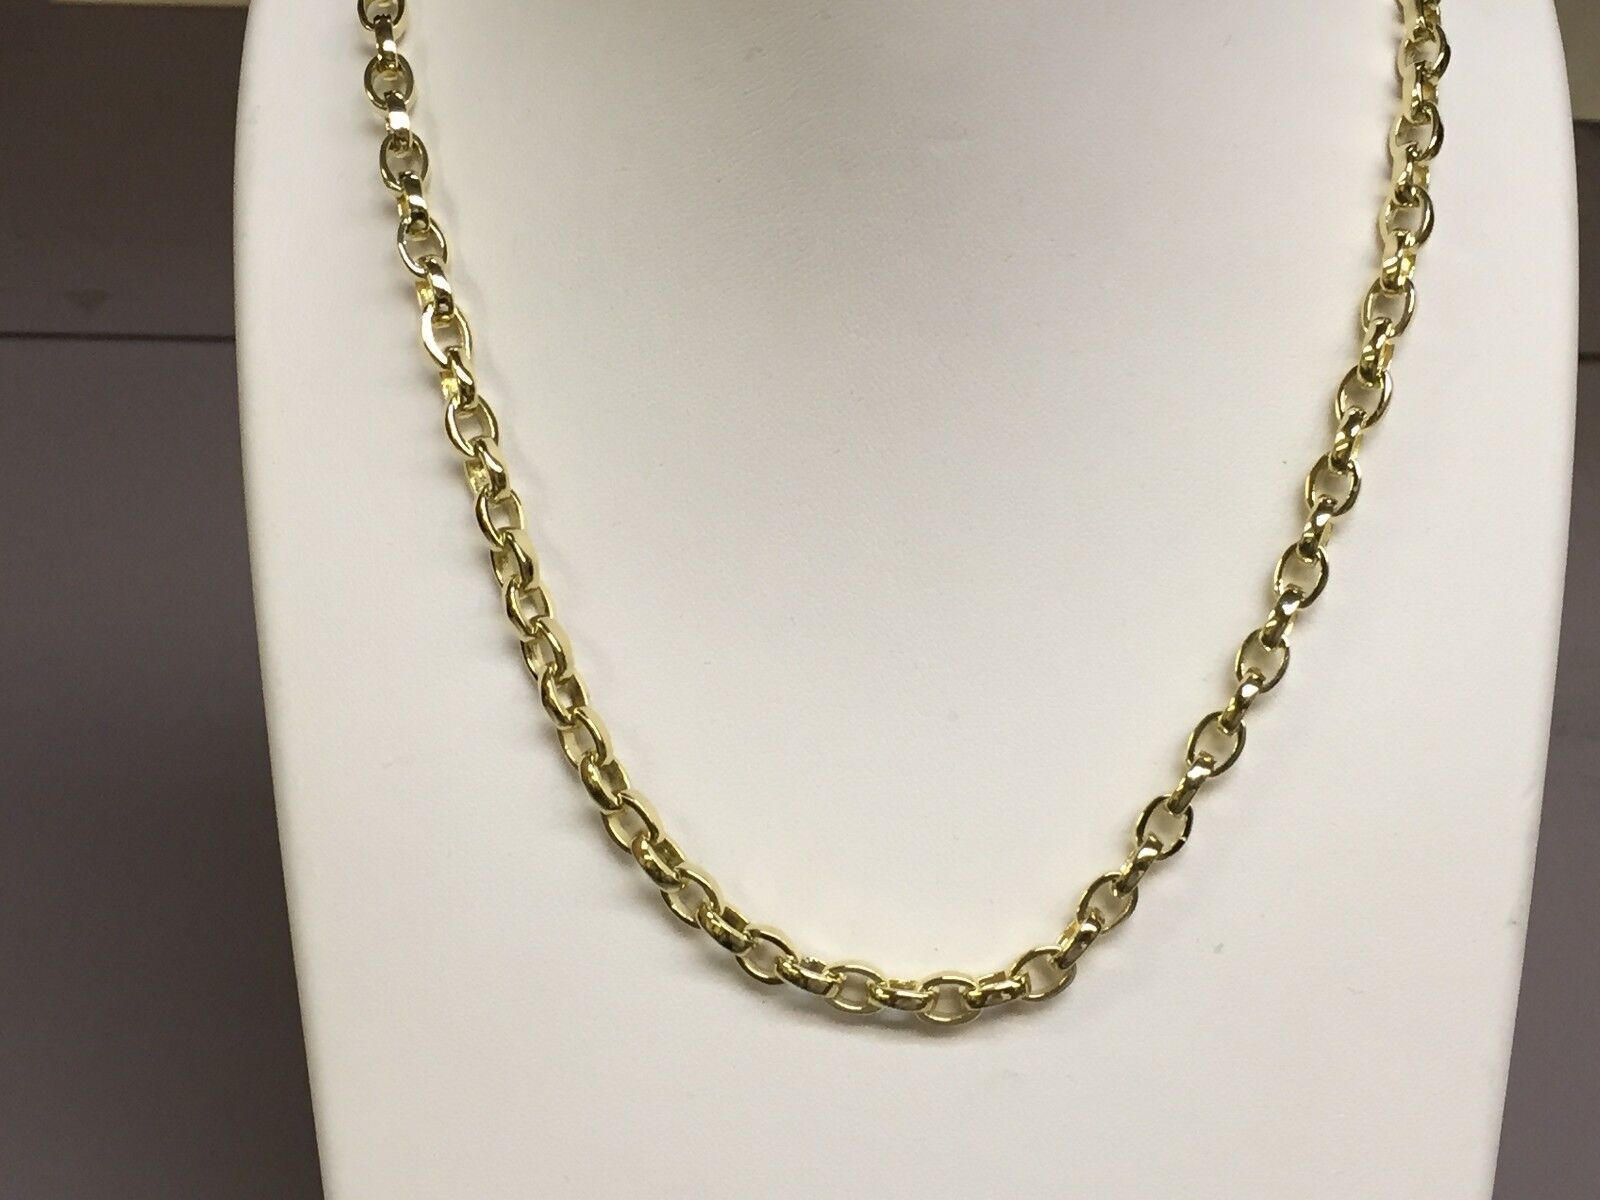 18kt solid gold handmade link men's chain/necklace 36